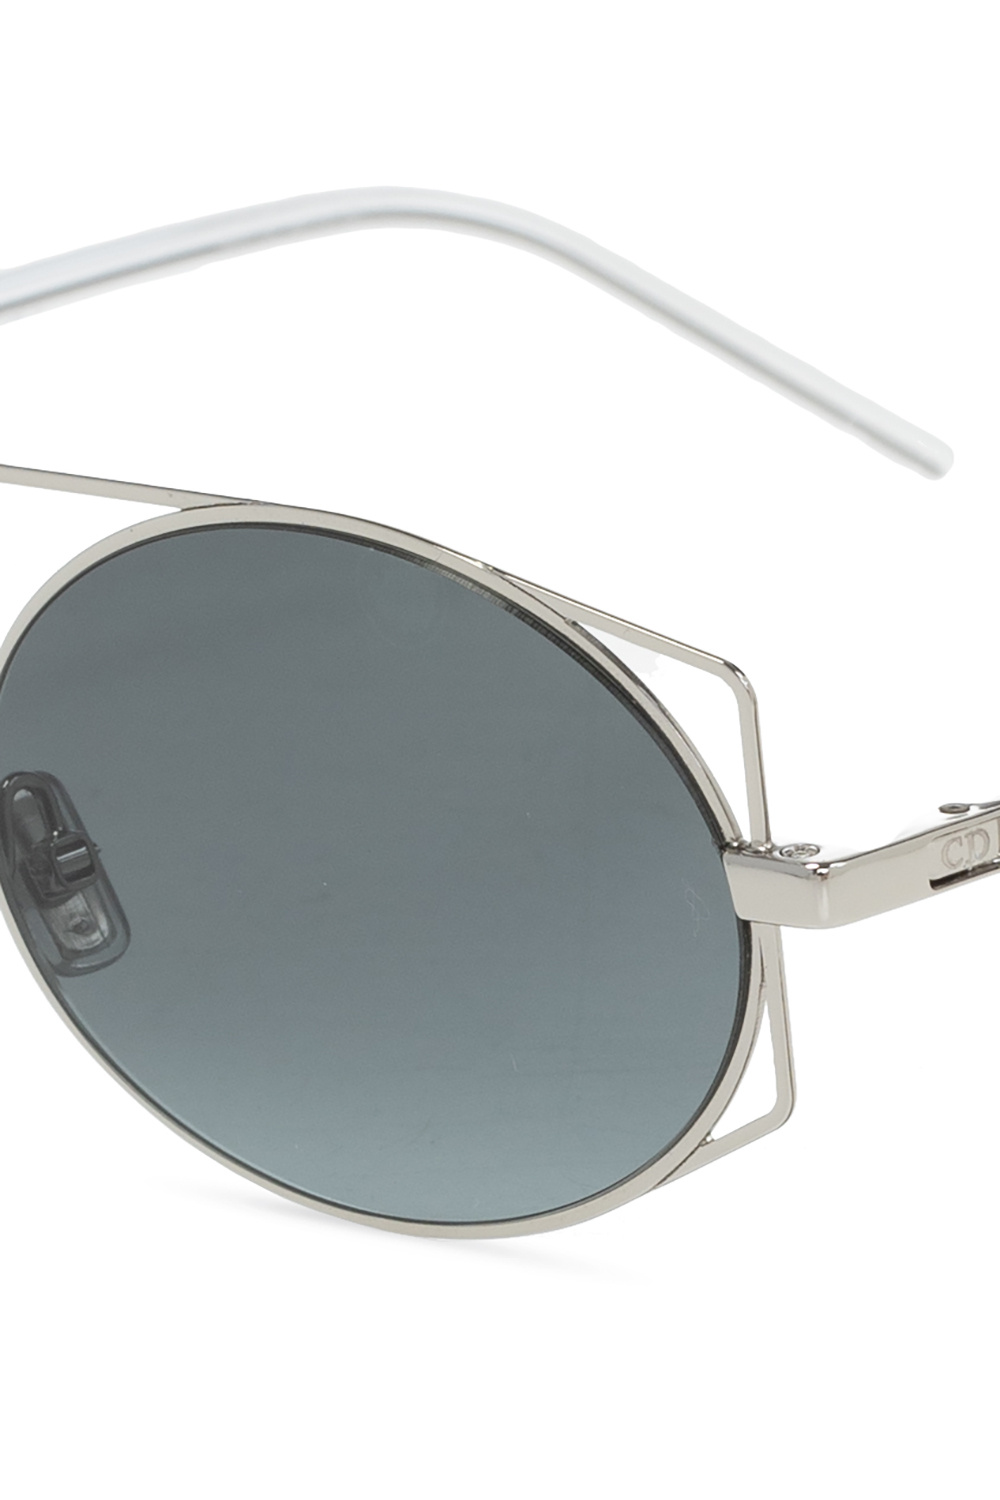 Architectural' sunglasses Dior - Sunglasses TOM FORD FT0821 5601D Black -  IetpShops Gabon